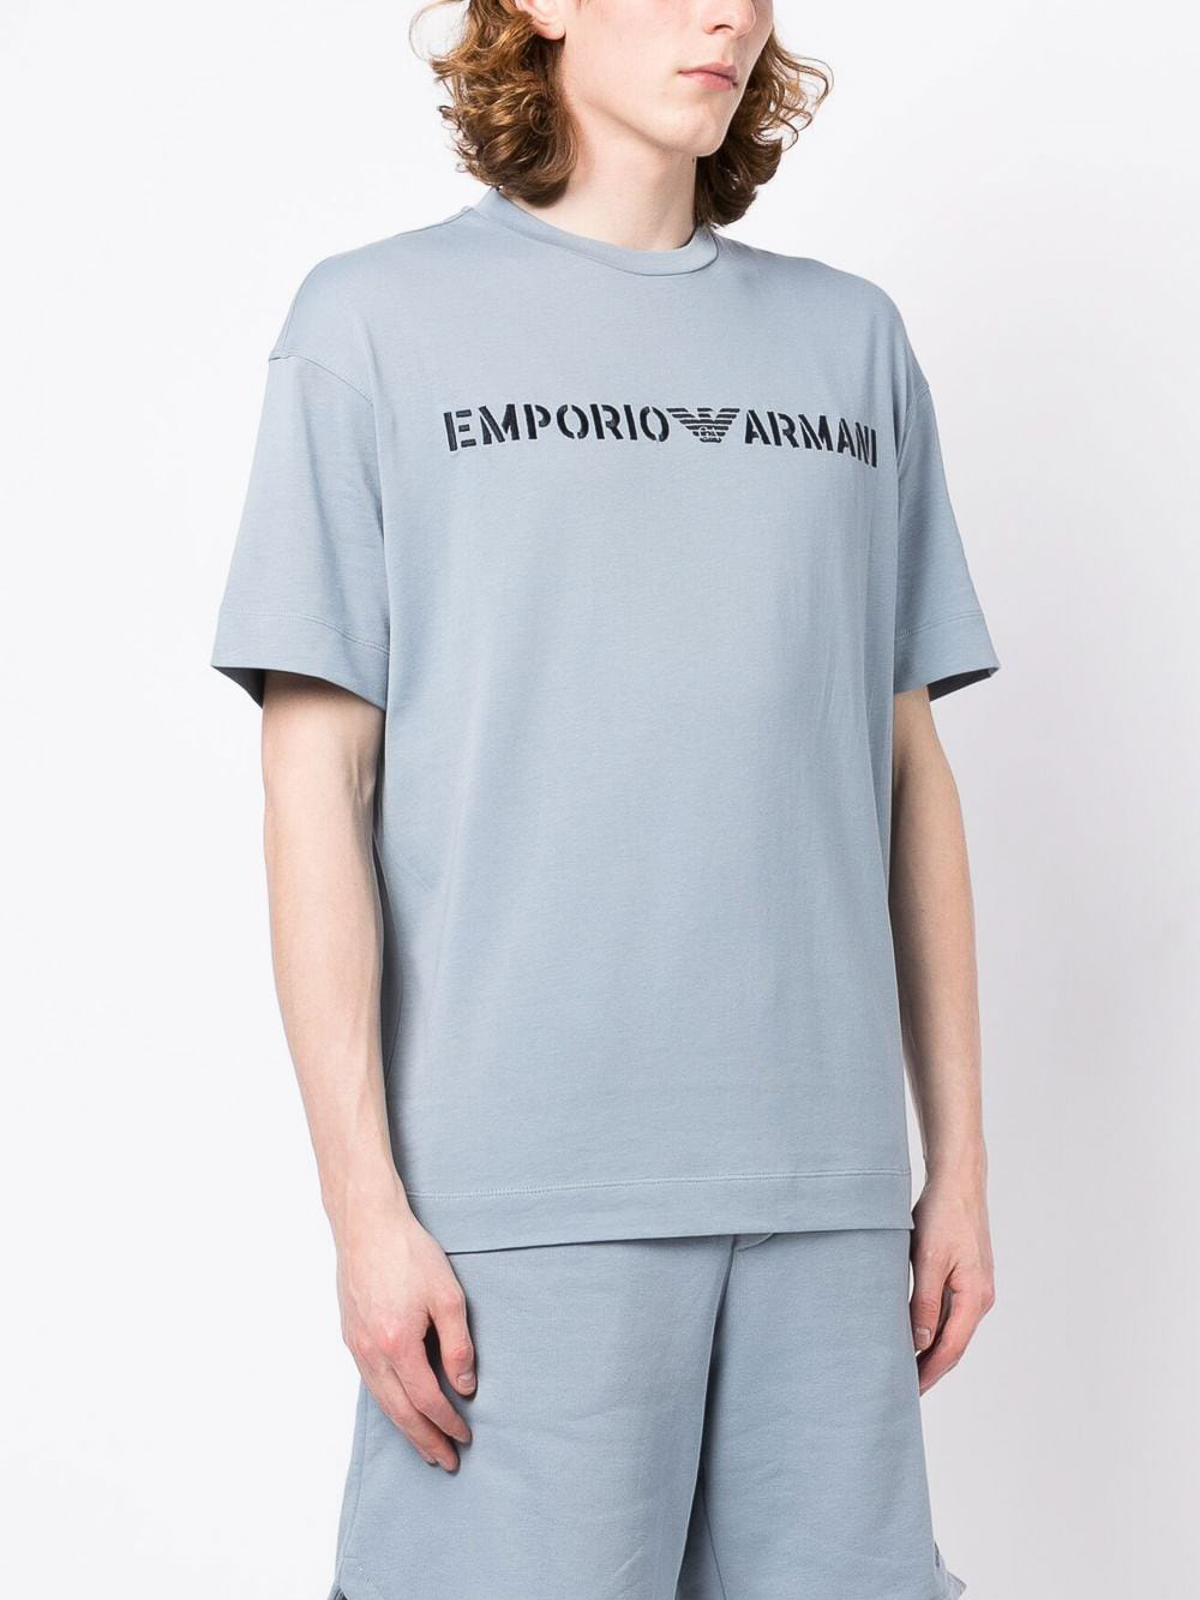 Printed cotton shirt by Emporio Armani